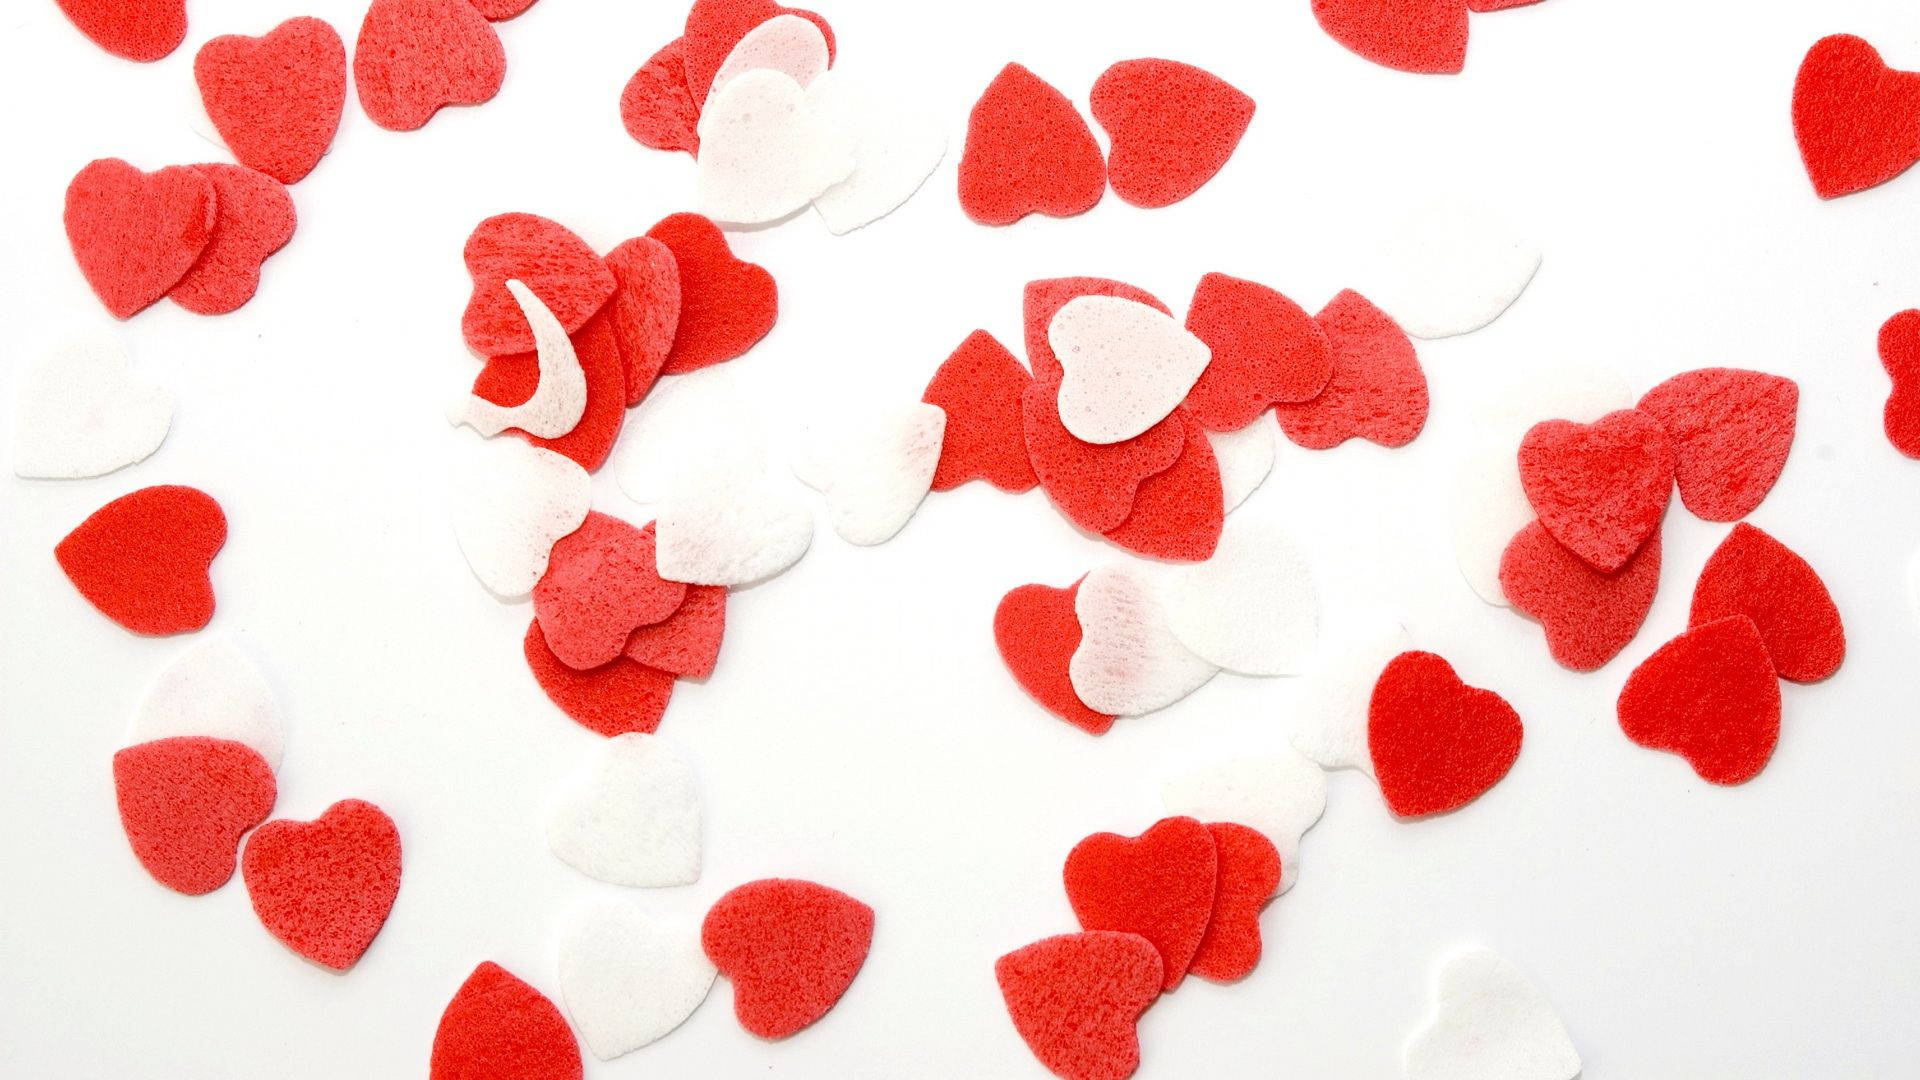 Download Paper Cutouts Of Valentine's Hearts Desktop Wallpaper | Wallpapers .com